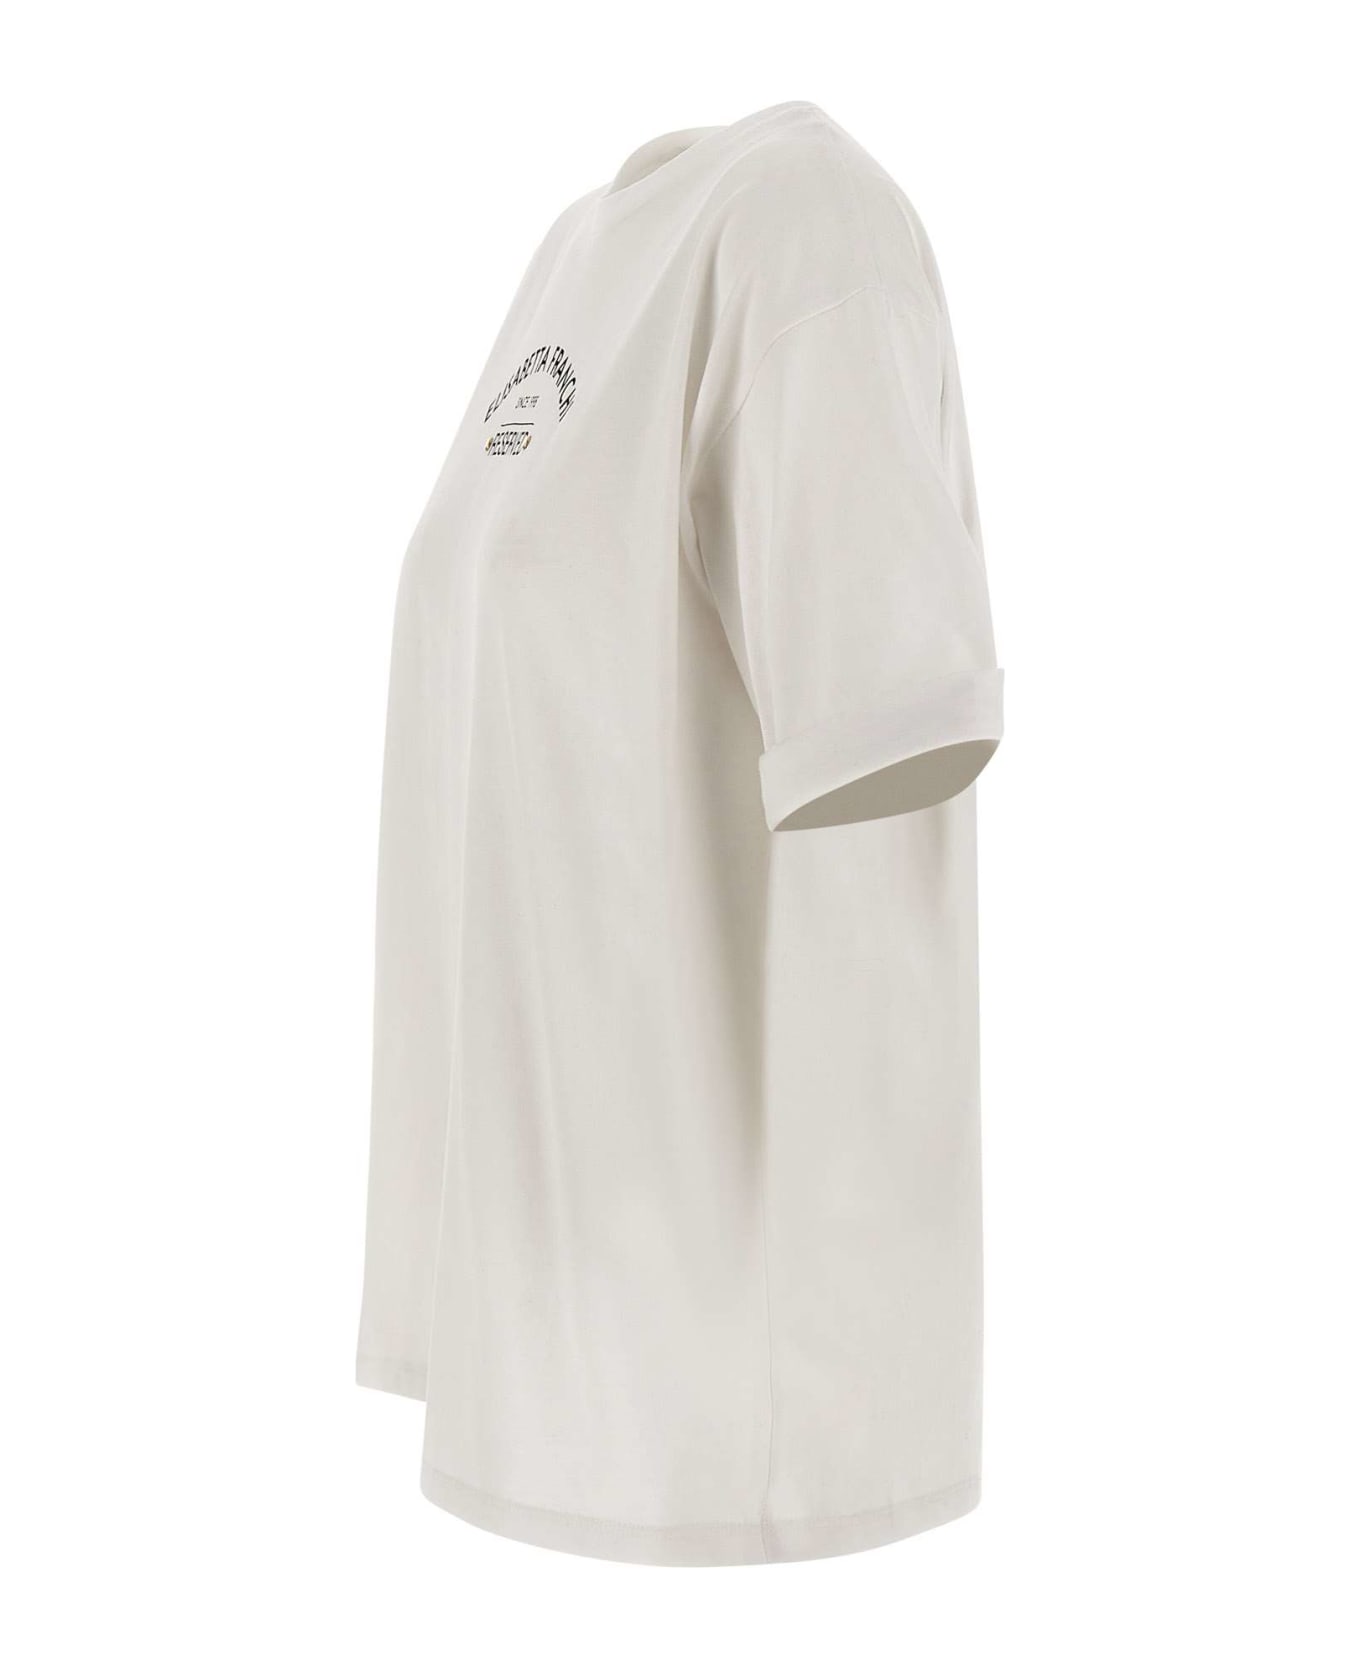 Elisabetta Franchi 'urban' Cotton T-shirt - WHITE Tシャツ